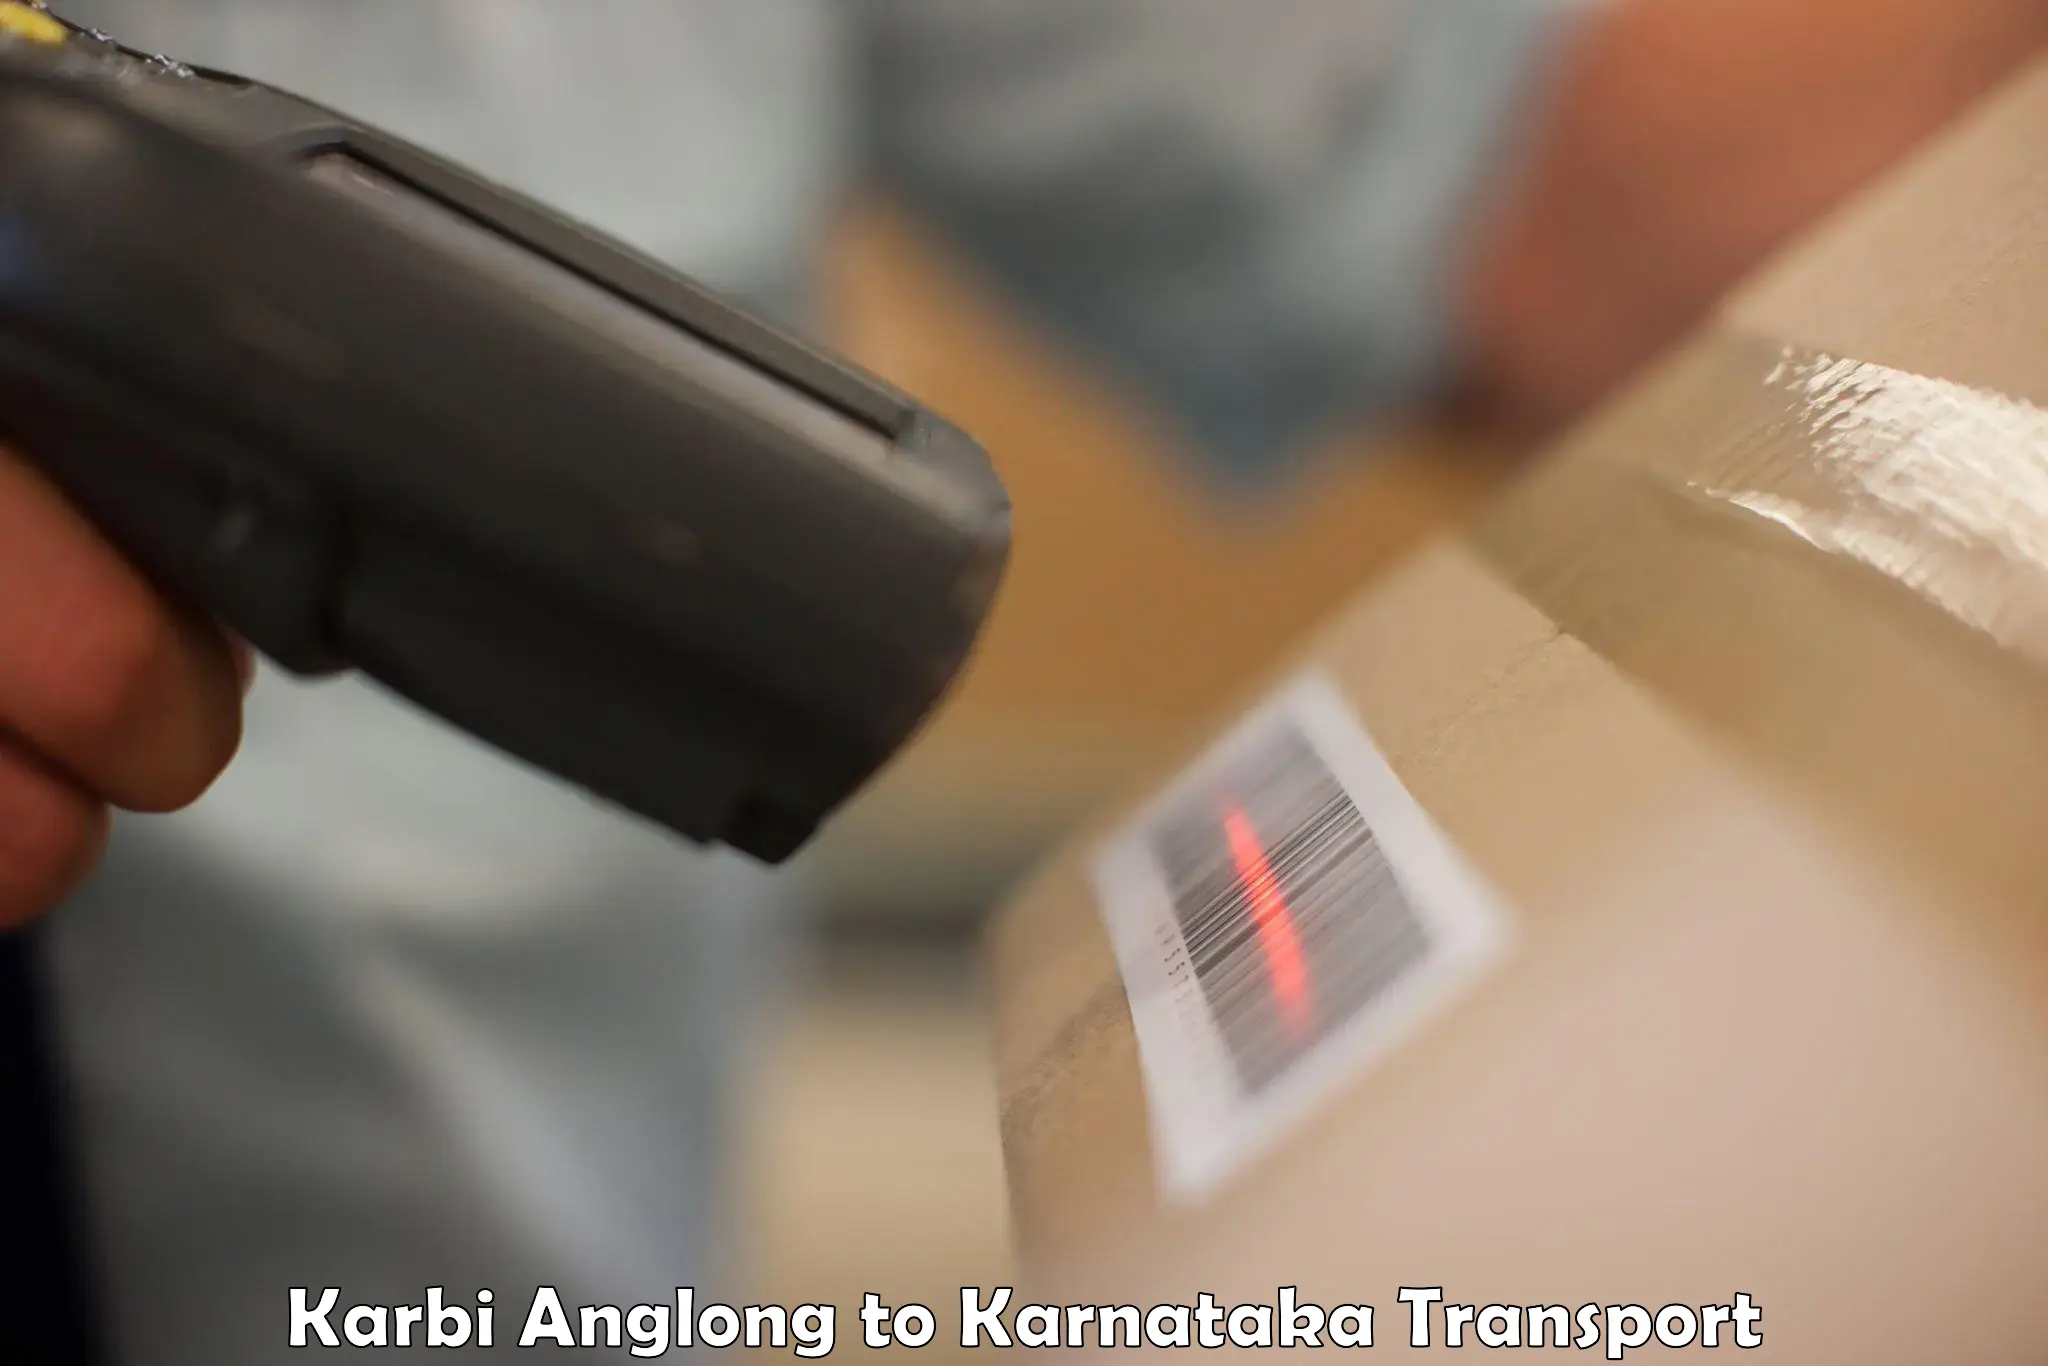 Delivery service Karbi Anglong to Mahalingpur